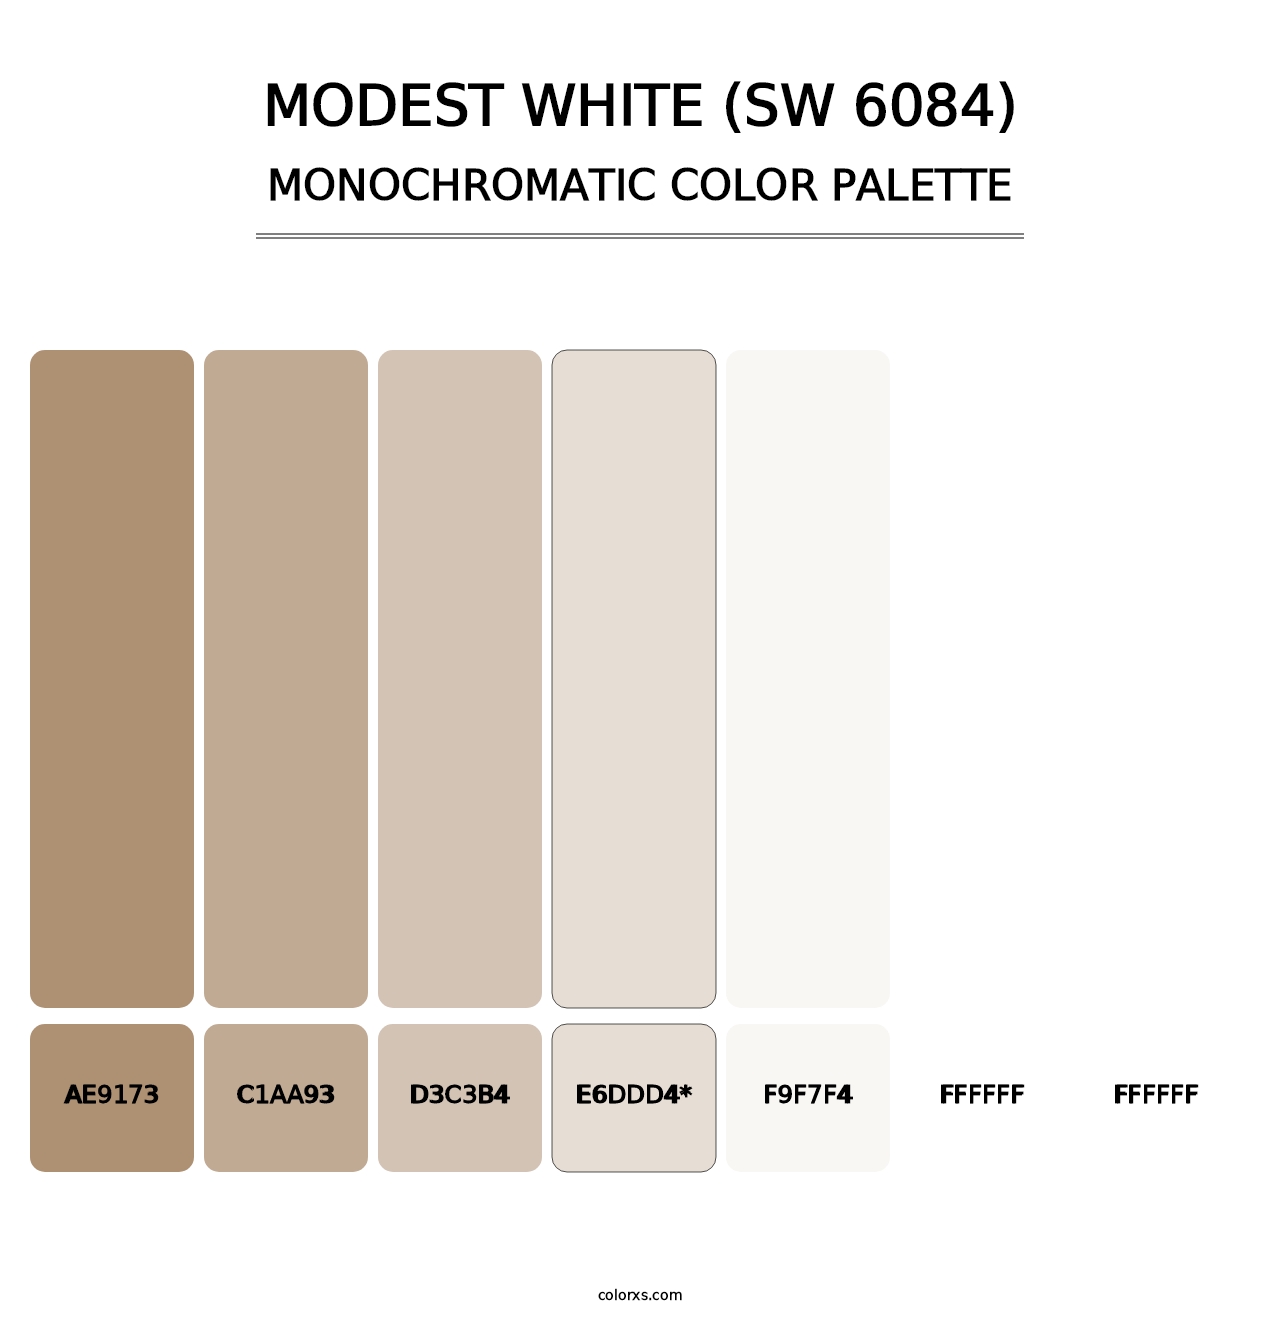 Modest White (SW 6084) - Monochromatic Color Palette